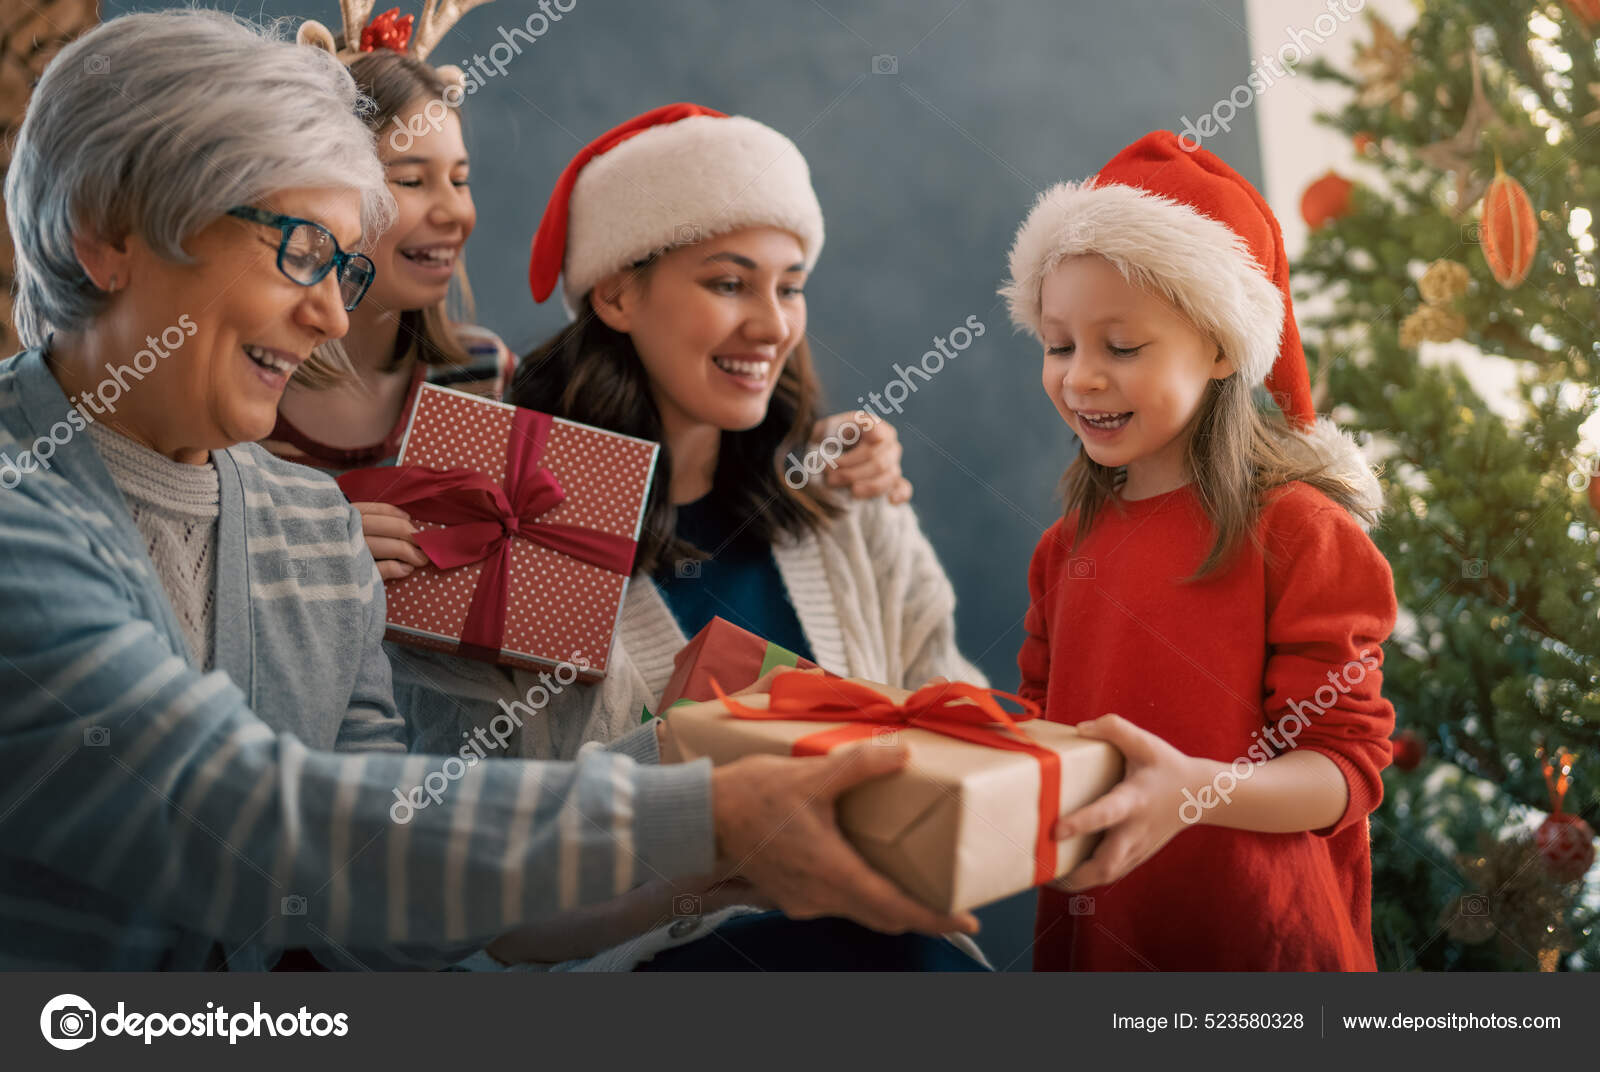 https://st.depositphotos.com/1003326/52358/i/1600/depositphotos_523580328-stock-photo-merry-christmas-happy-holidays-cheerful.jpg